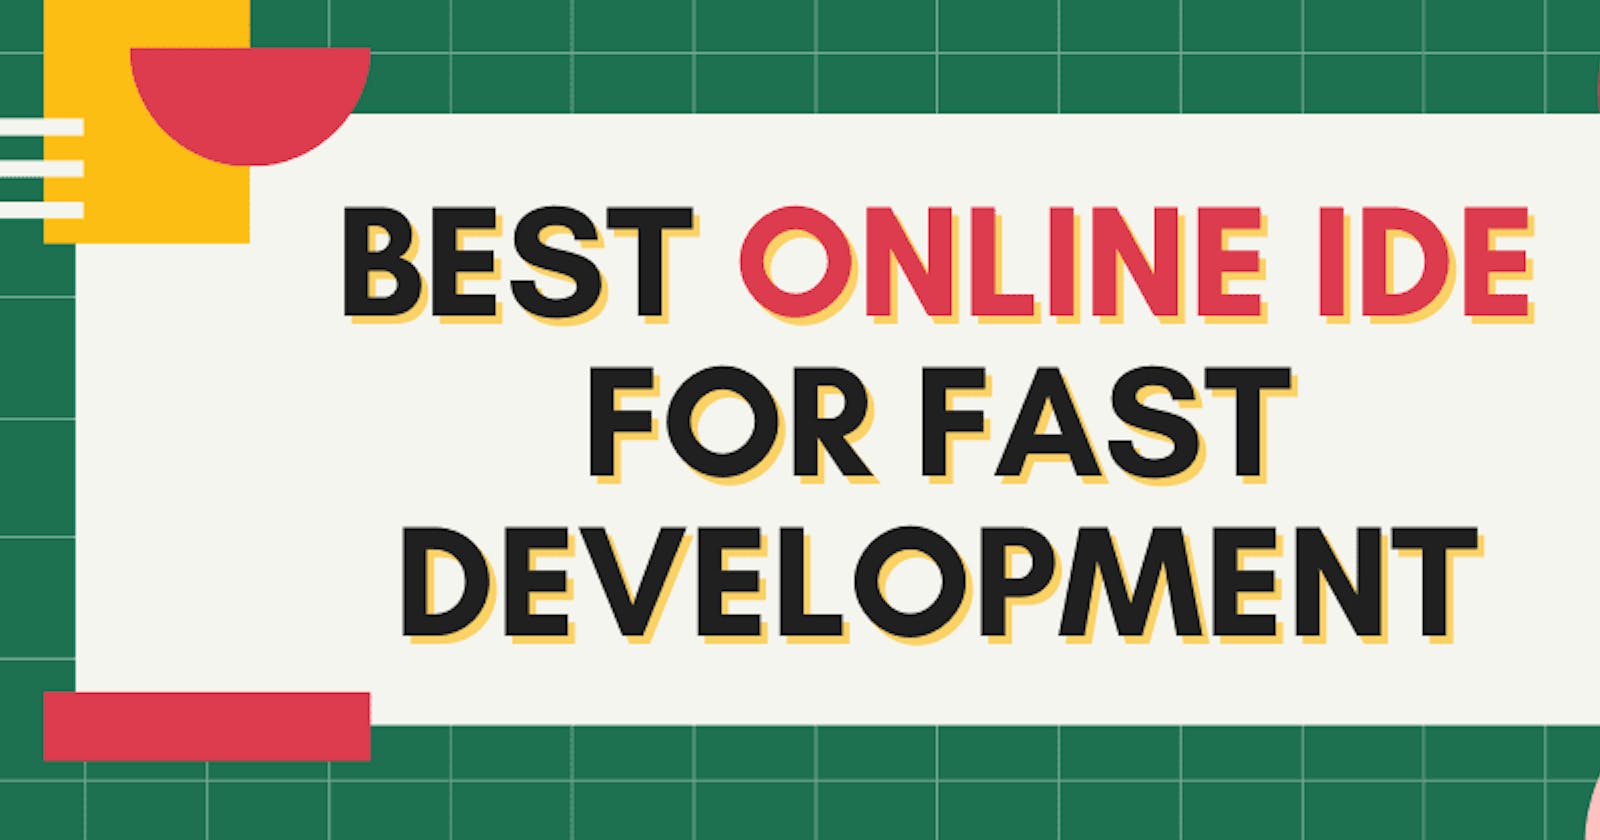 Best Online IDE for Fast Development